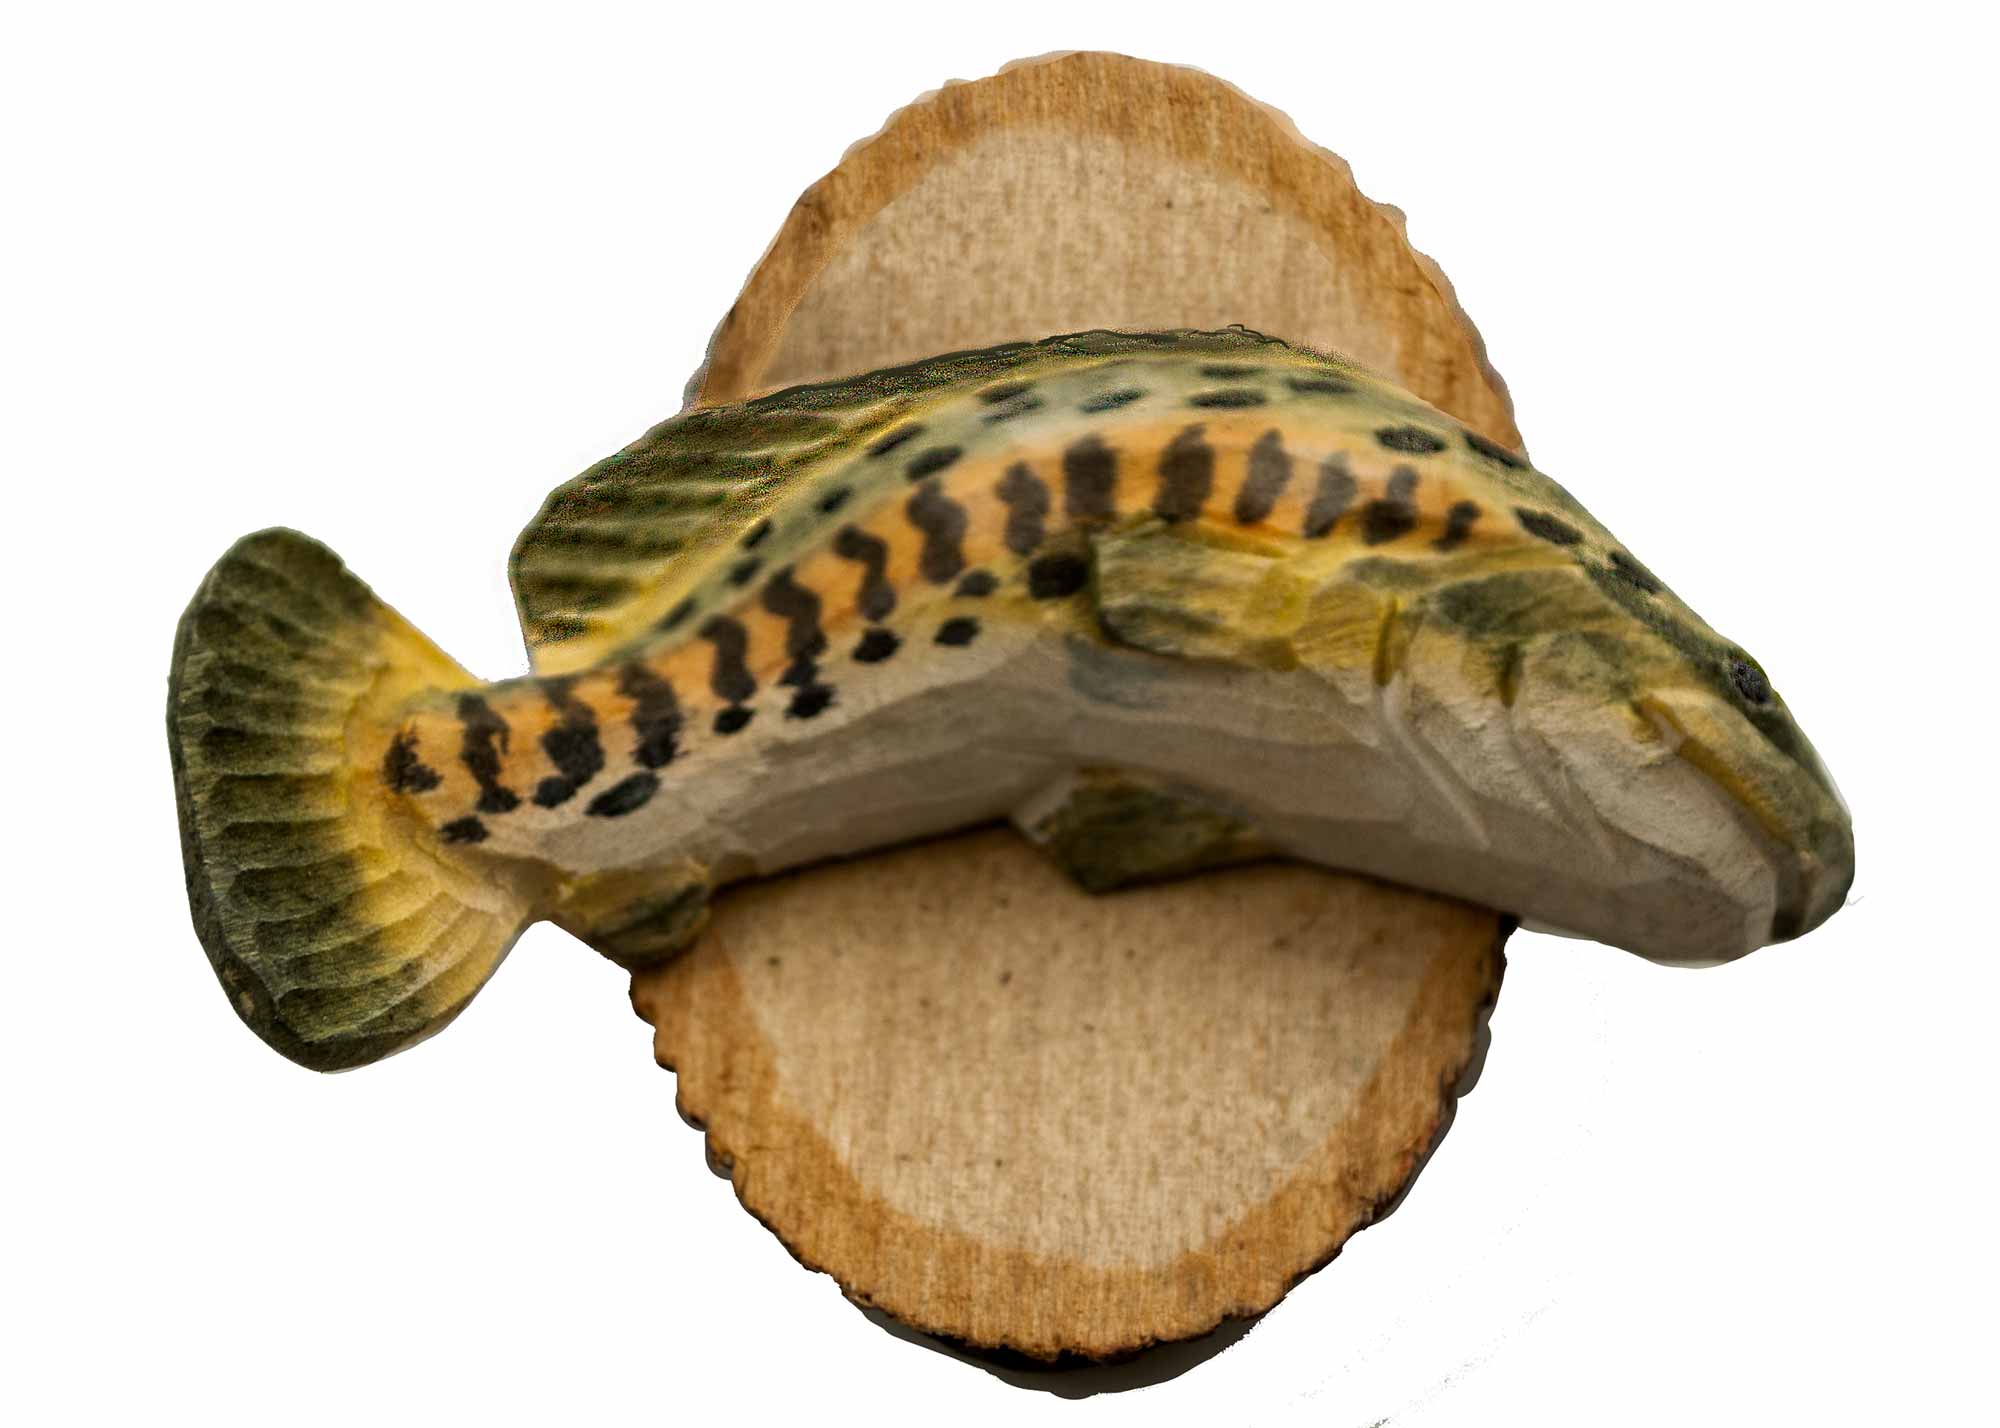 Buy Perch Fish Wildlife Magnet at GoldenCockerel.com